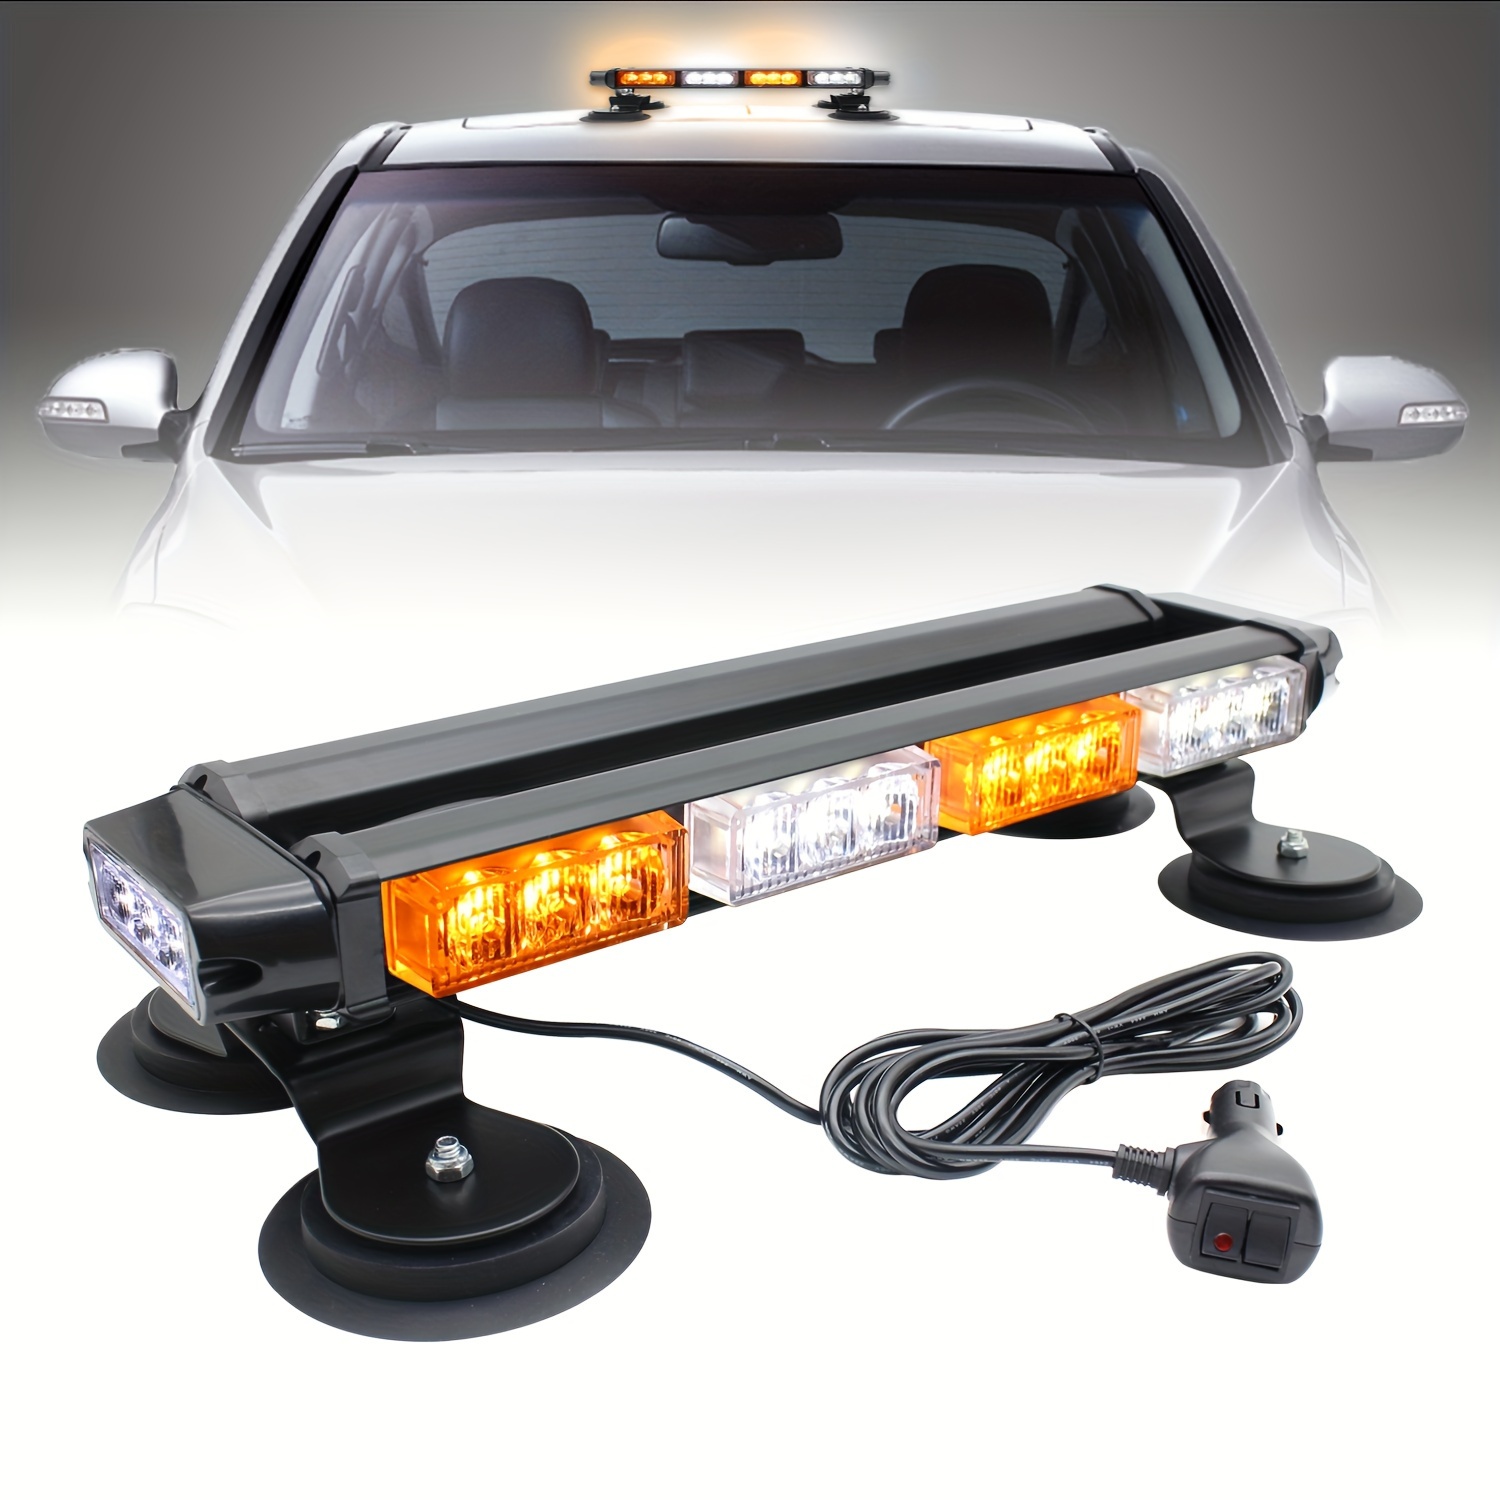 4 Luces LED Balizas de Emergencia Ámbar para Camión Automóvil Luz de  Advertencia